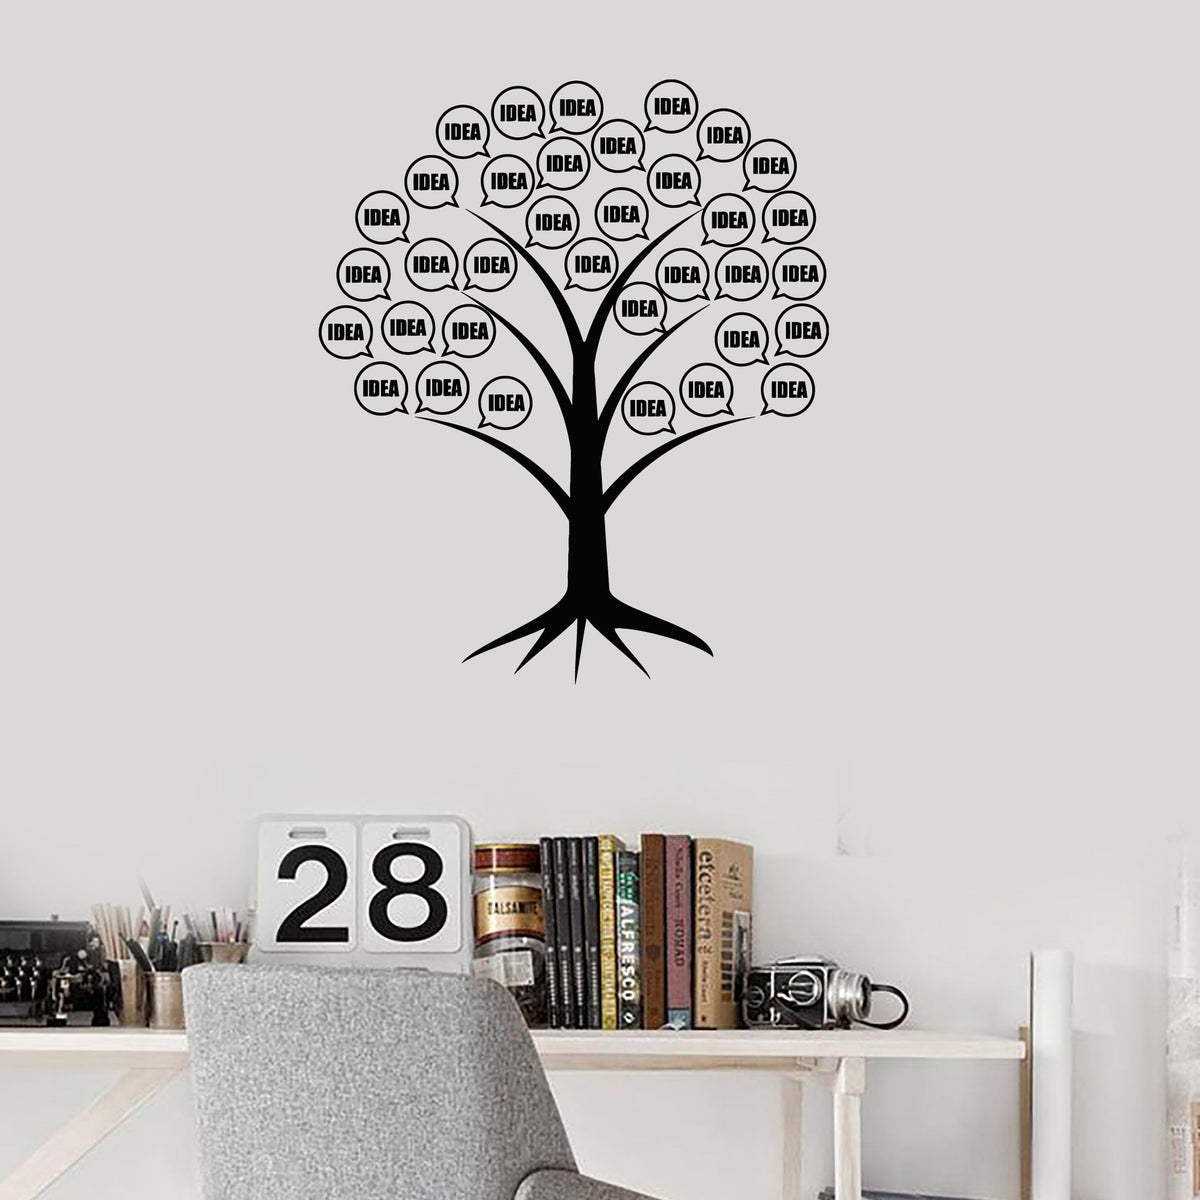 Vinyl Wall Decal Tree Ideas Brainstorm